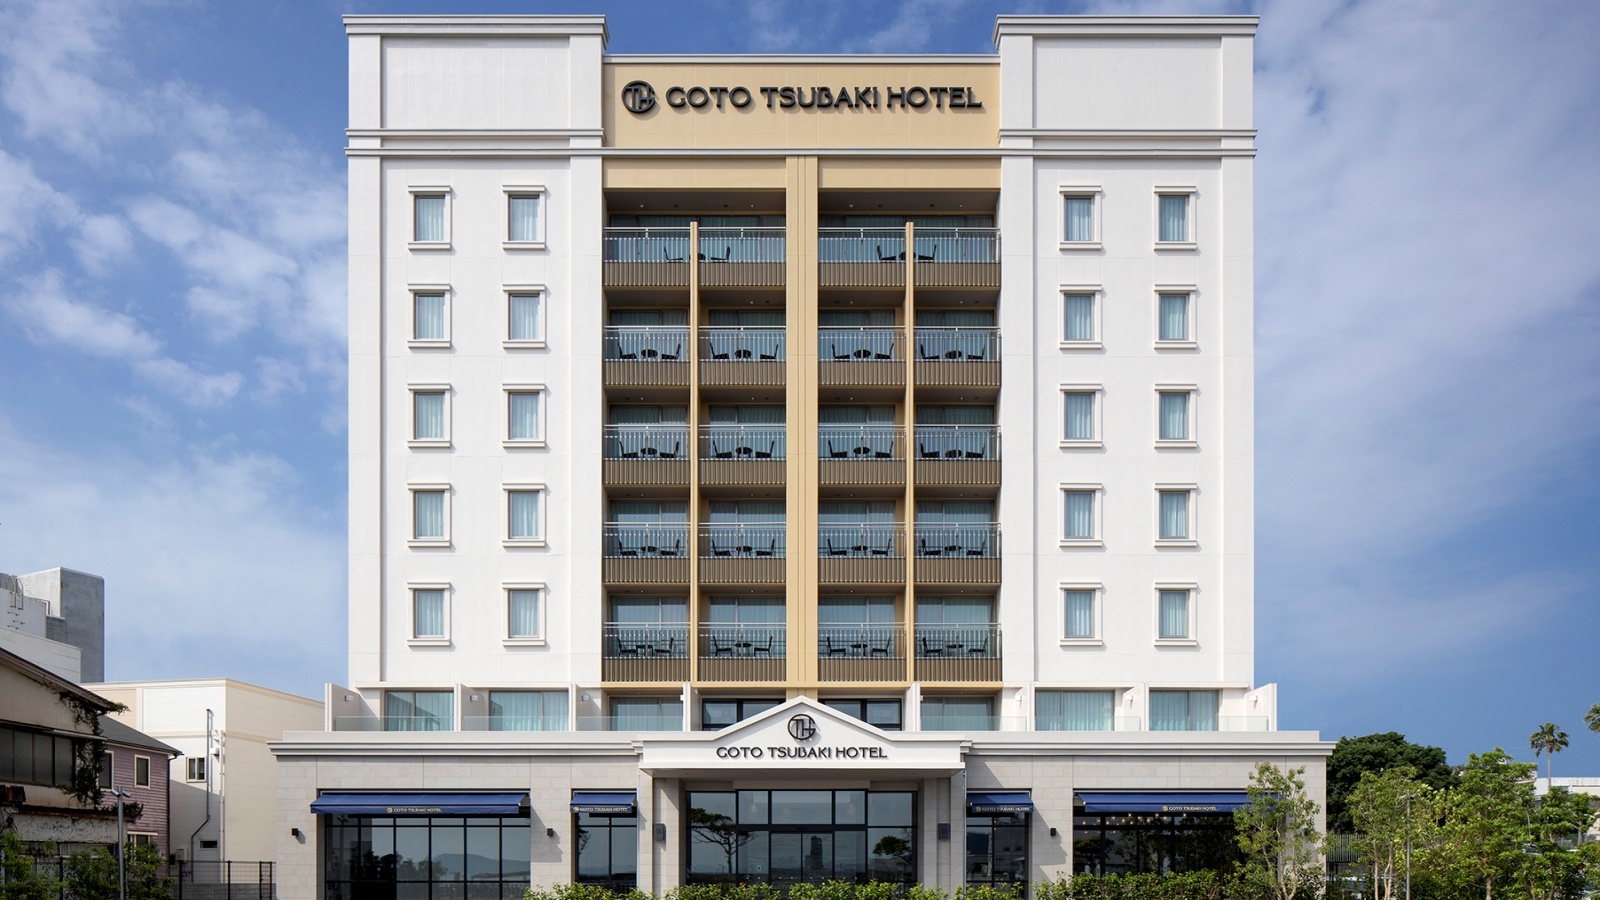 Goto Tsubaki Hotel (Goto, Fukuejima)